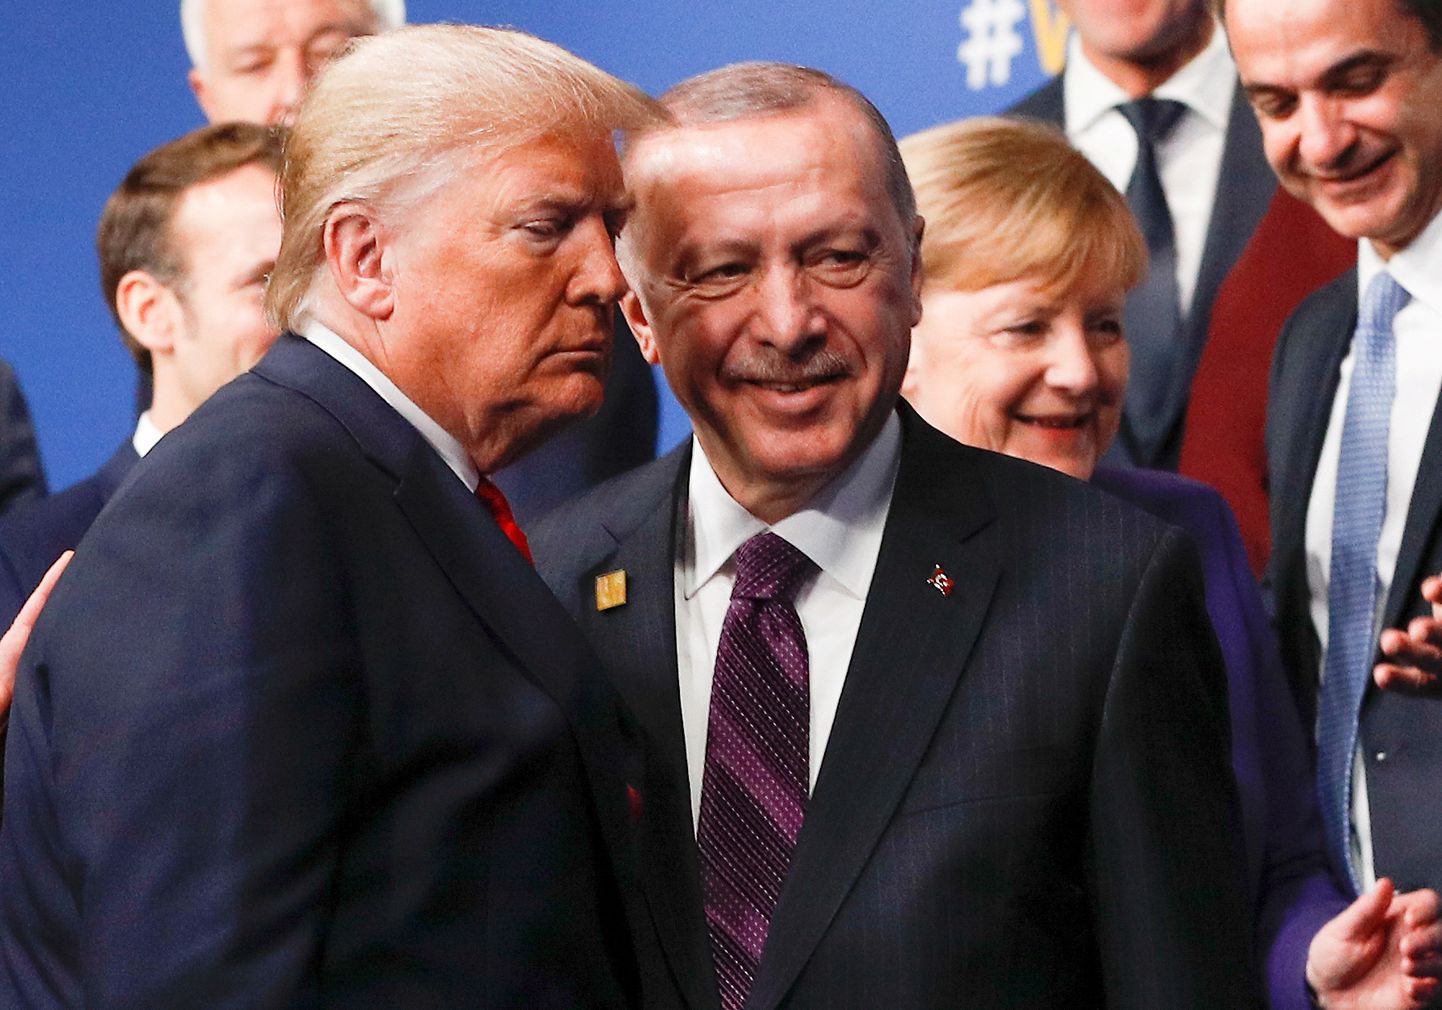 Türgi president Recep Tayyip Erdoğan ja USA riigipea Donald Trump